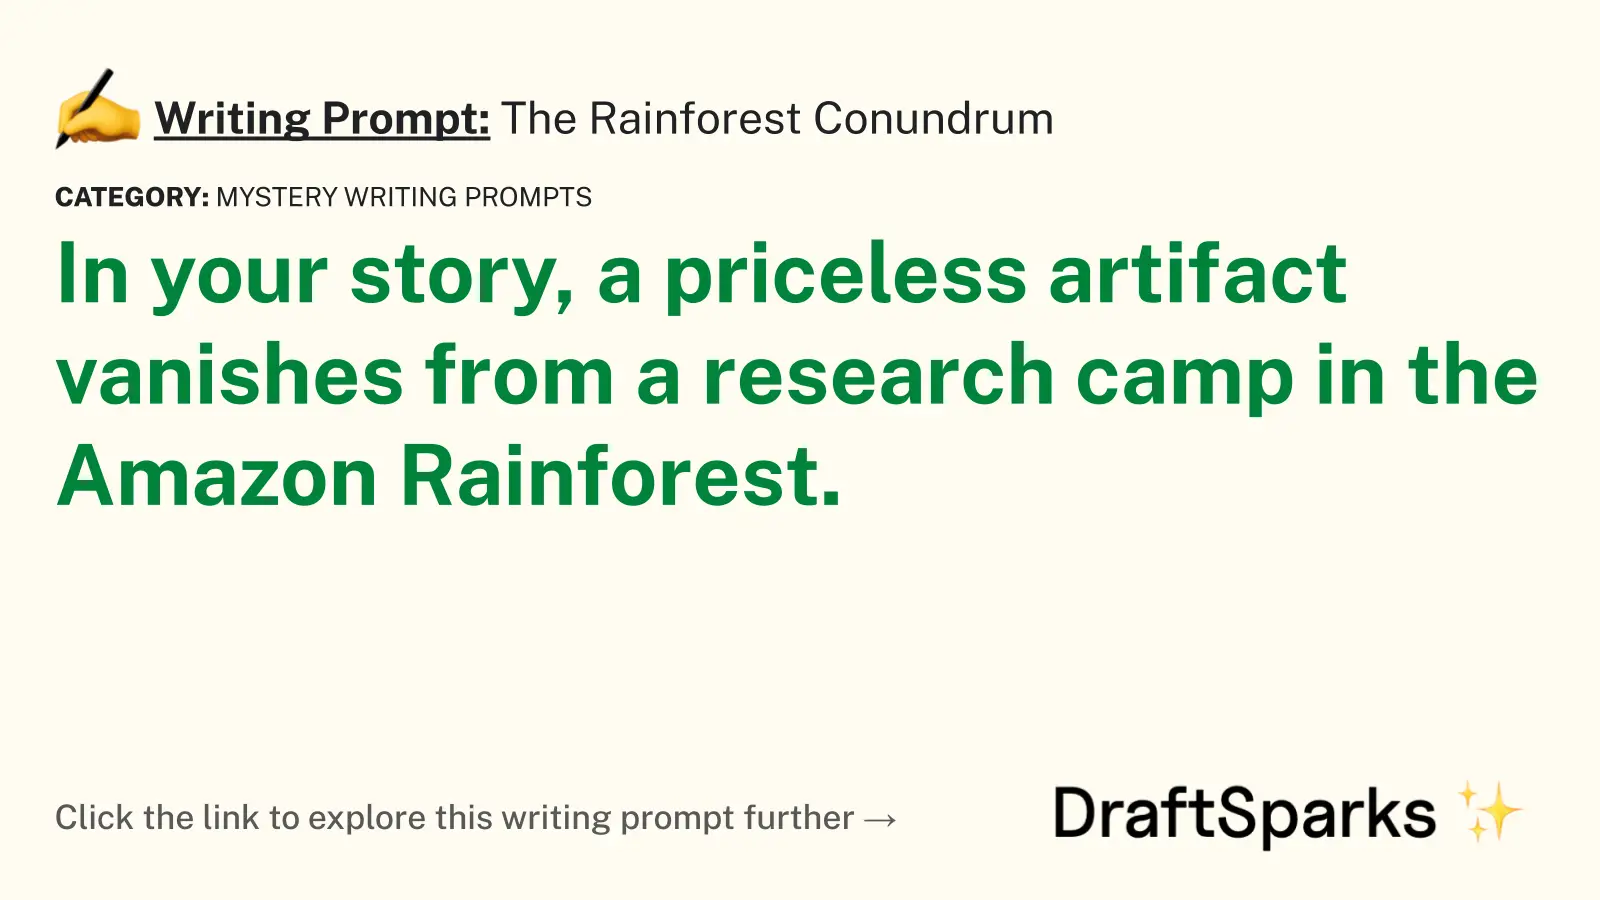 The Rainforest Conundrum